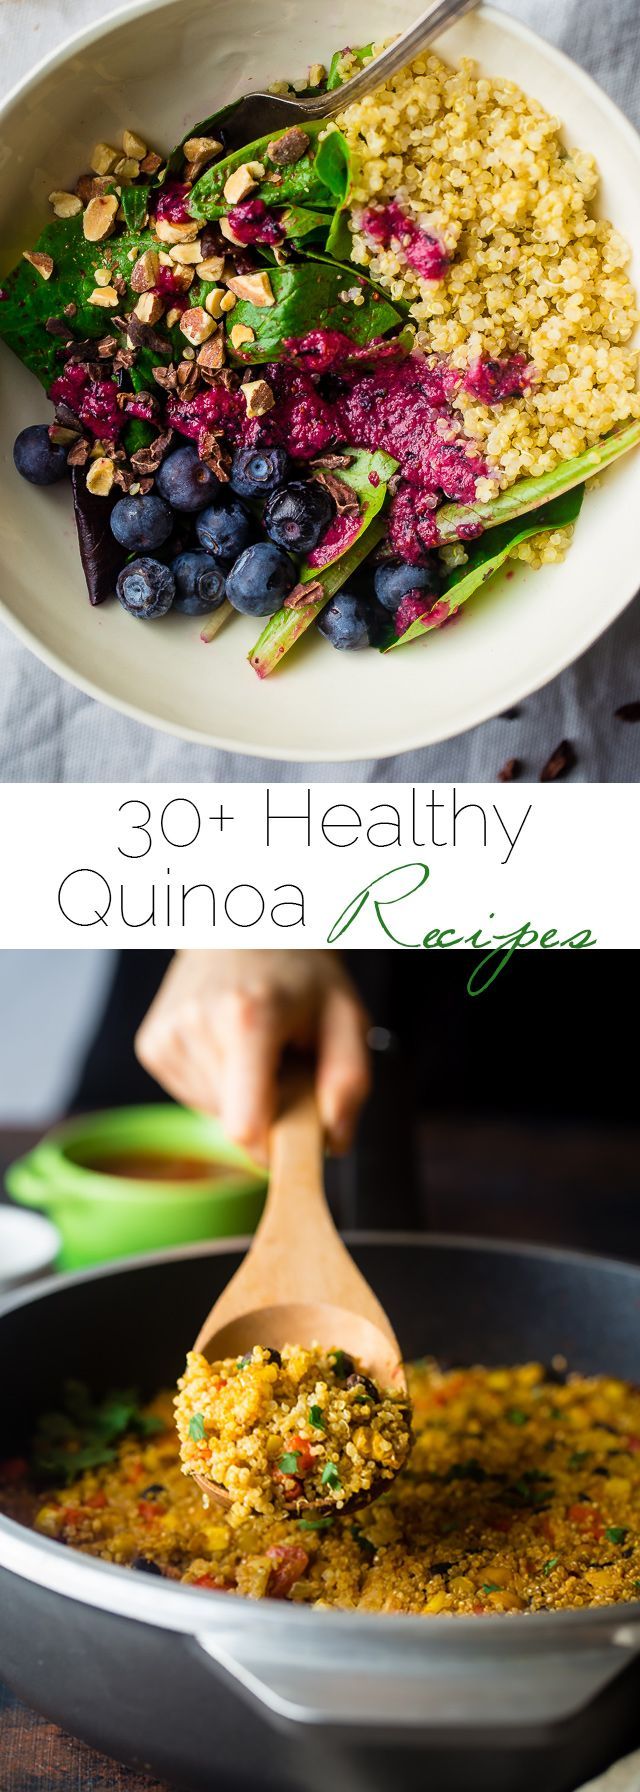 30+ Healthy Quinoa Recipes  - The best quinoa recipes that taste great and will lighten up your waistline! | Foodfaithfitness.com | @FoodFaithFit -   19 best quinoa recipes
 ideas